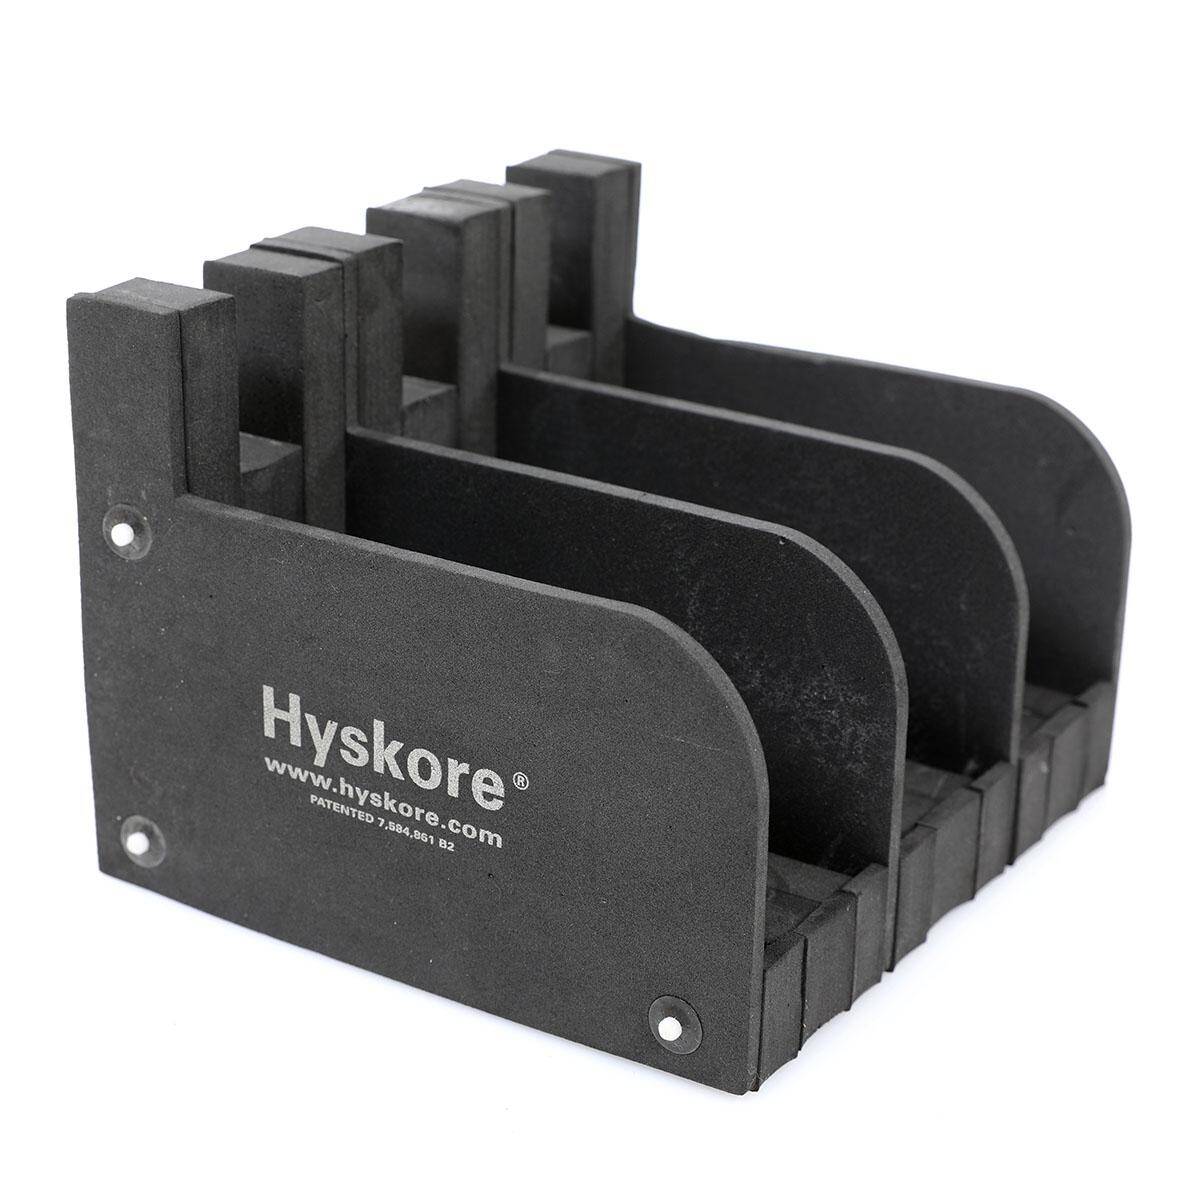 Hyskore Modular Foam Handgun Rack